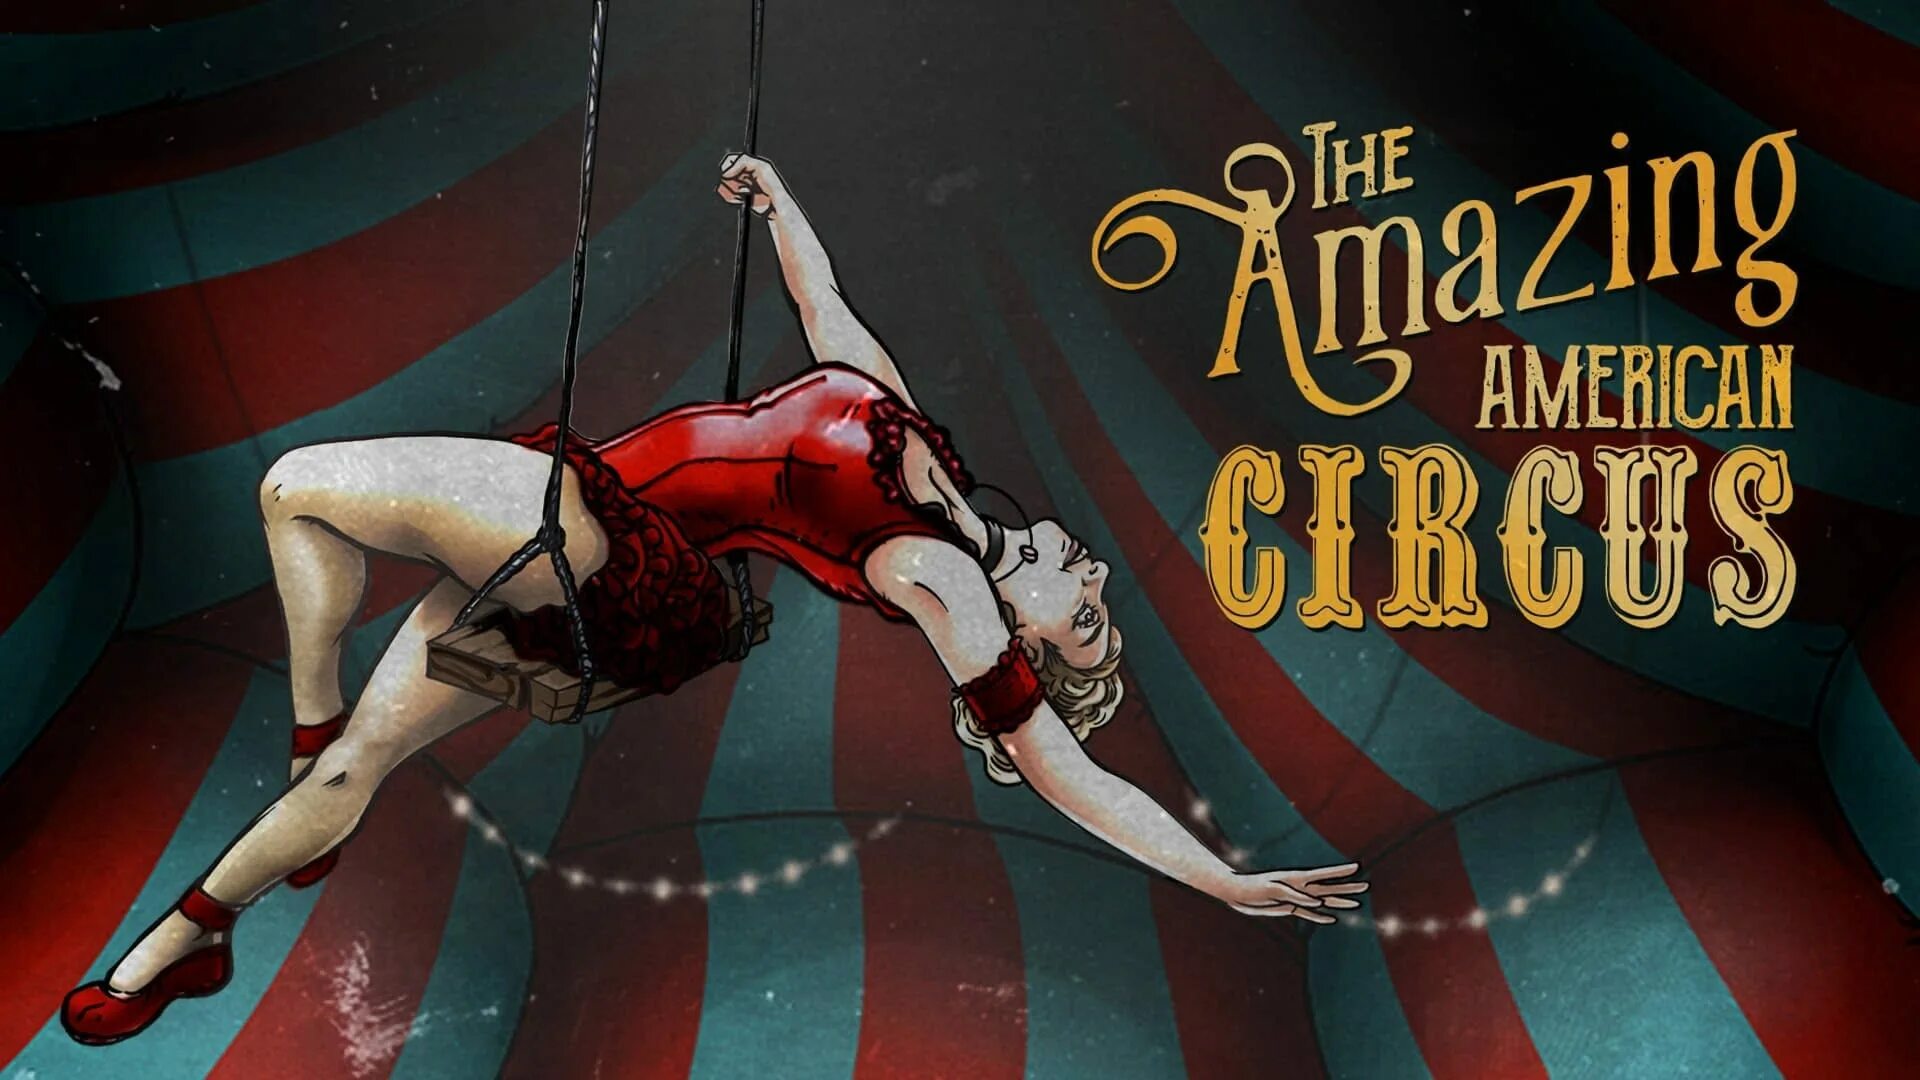 Цифровой цирк фэндом. Американский цирк. Цирк заставка. Симулятор цирка. The amazing American Circus.